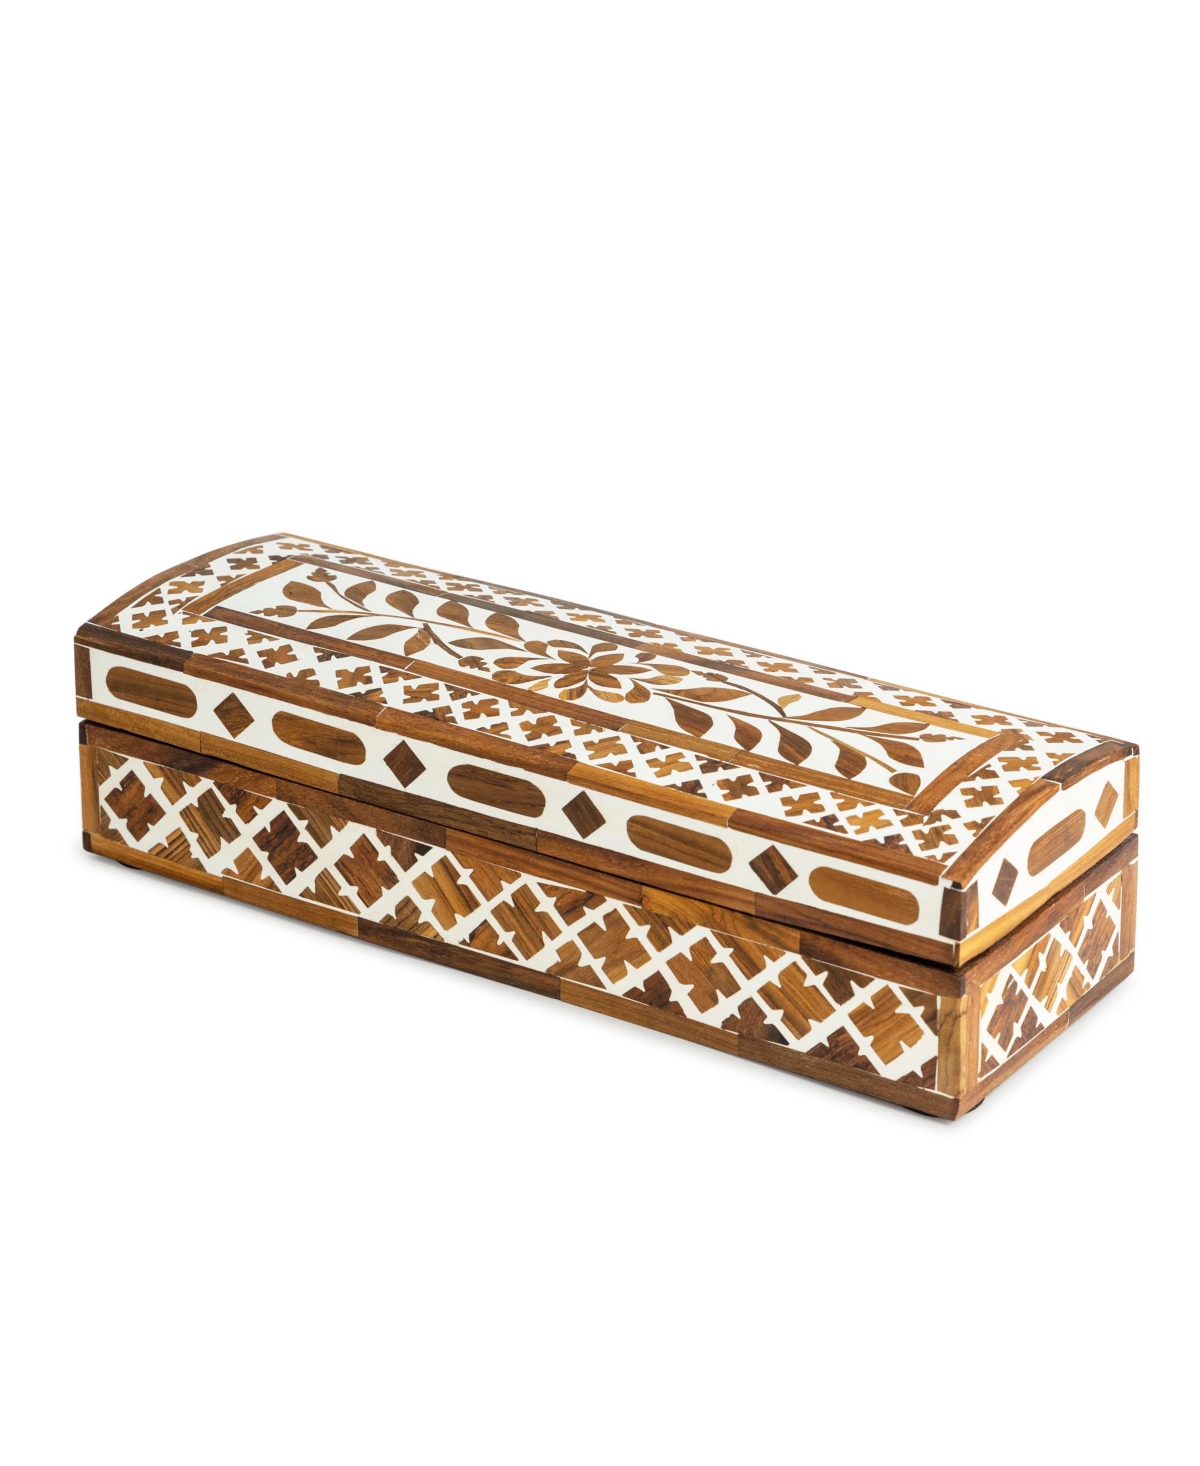 Jodhpur Wood Inlay Decorative Jewelry Box, Small - Brown